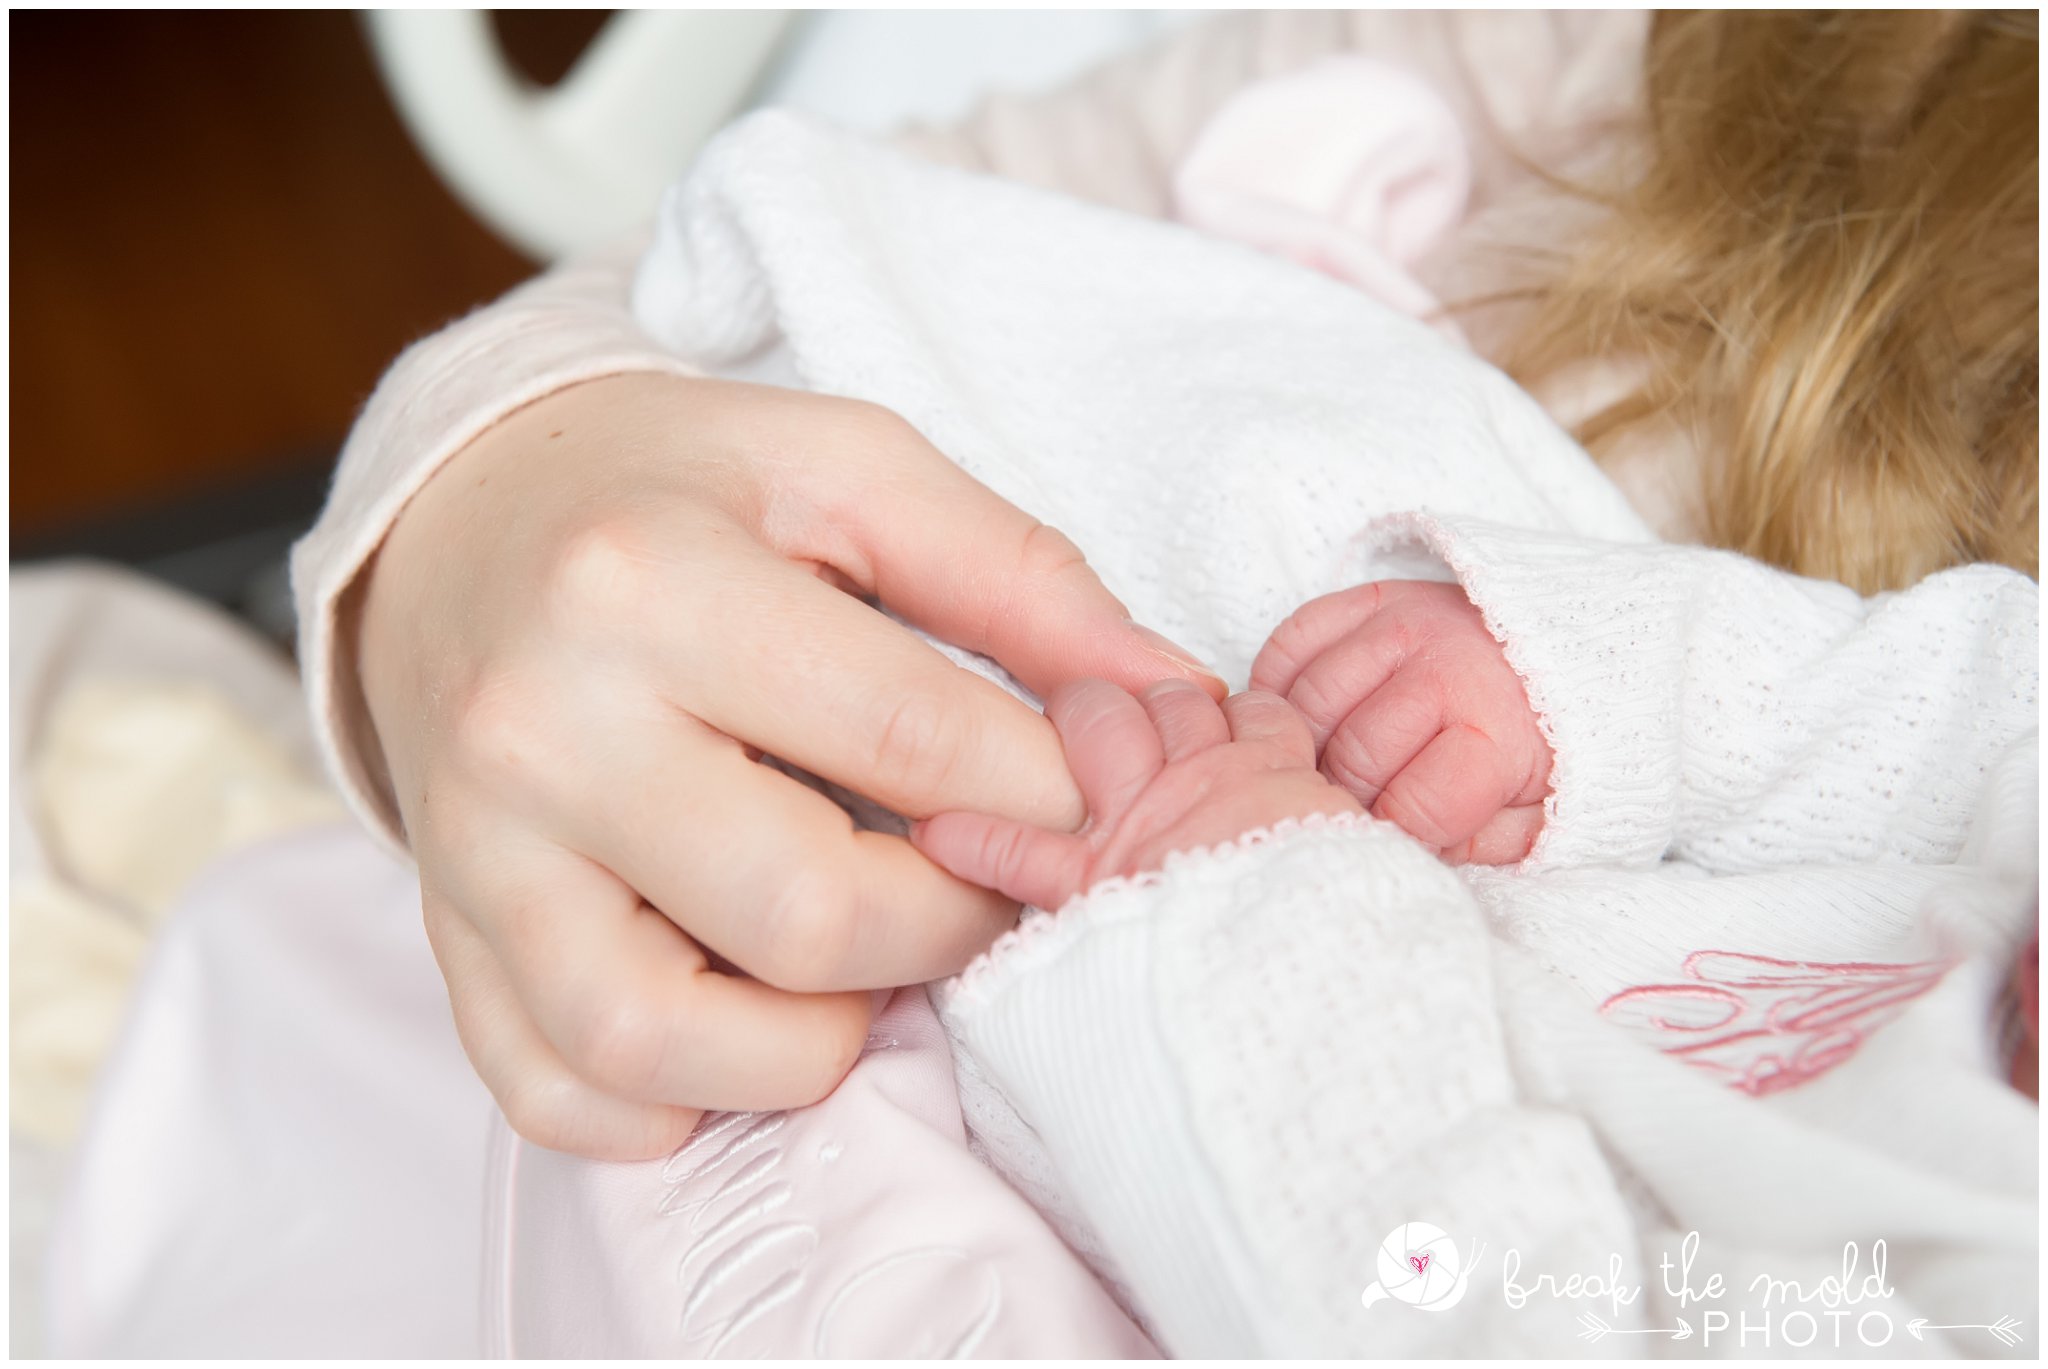 fresh-24-newborn-in-hospital-break-the-mold-photo-baby-girl-sweet-in-room-photos (40).jpg